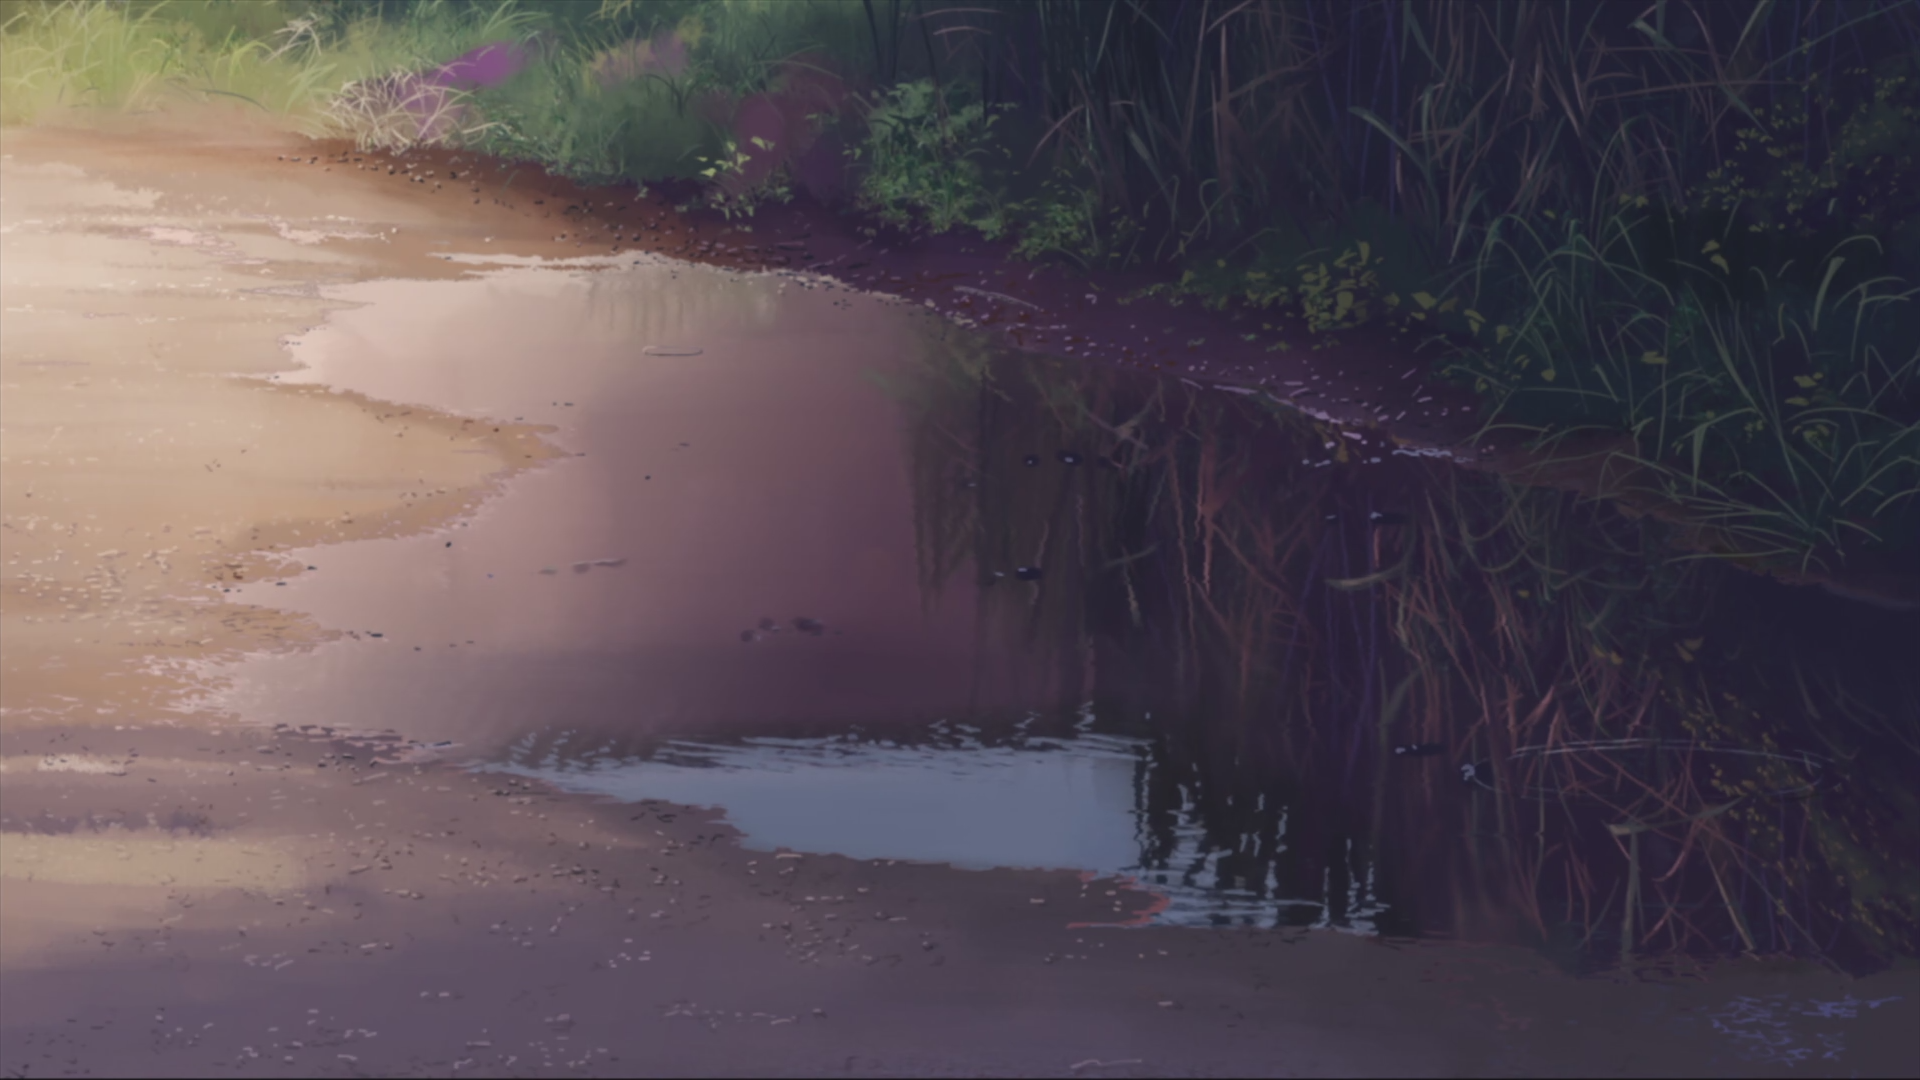 Makoto Shinkai, 5 Centimeters Per Second, artwork, anime, reflections, puddles - desktop wallpaper